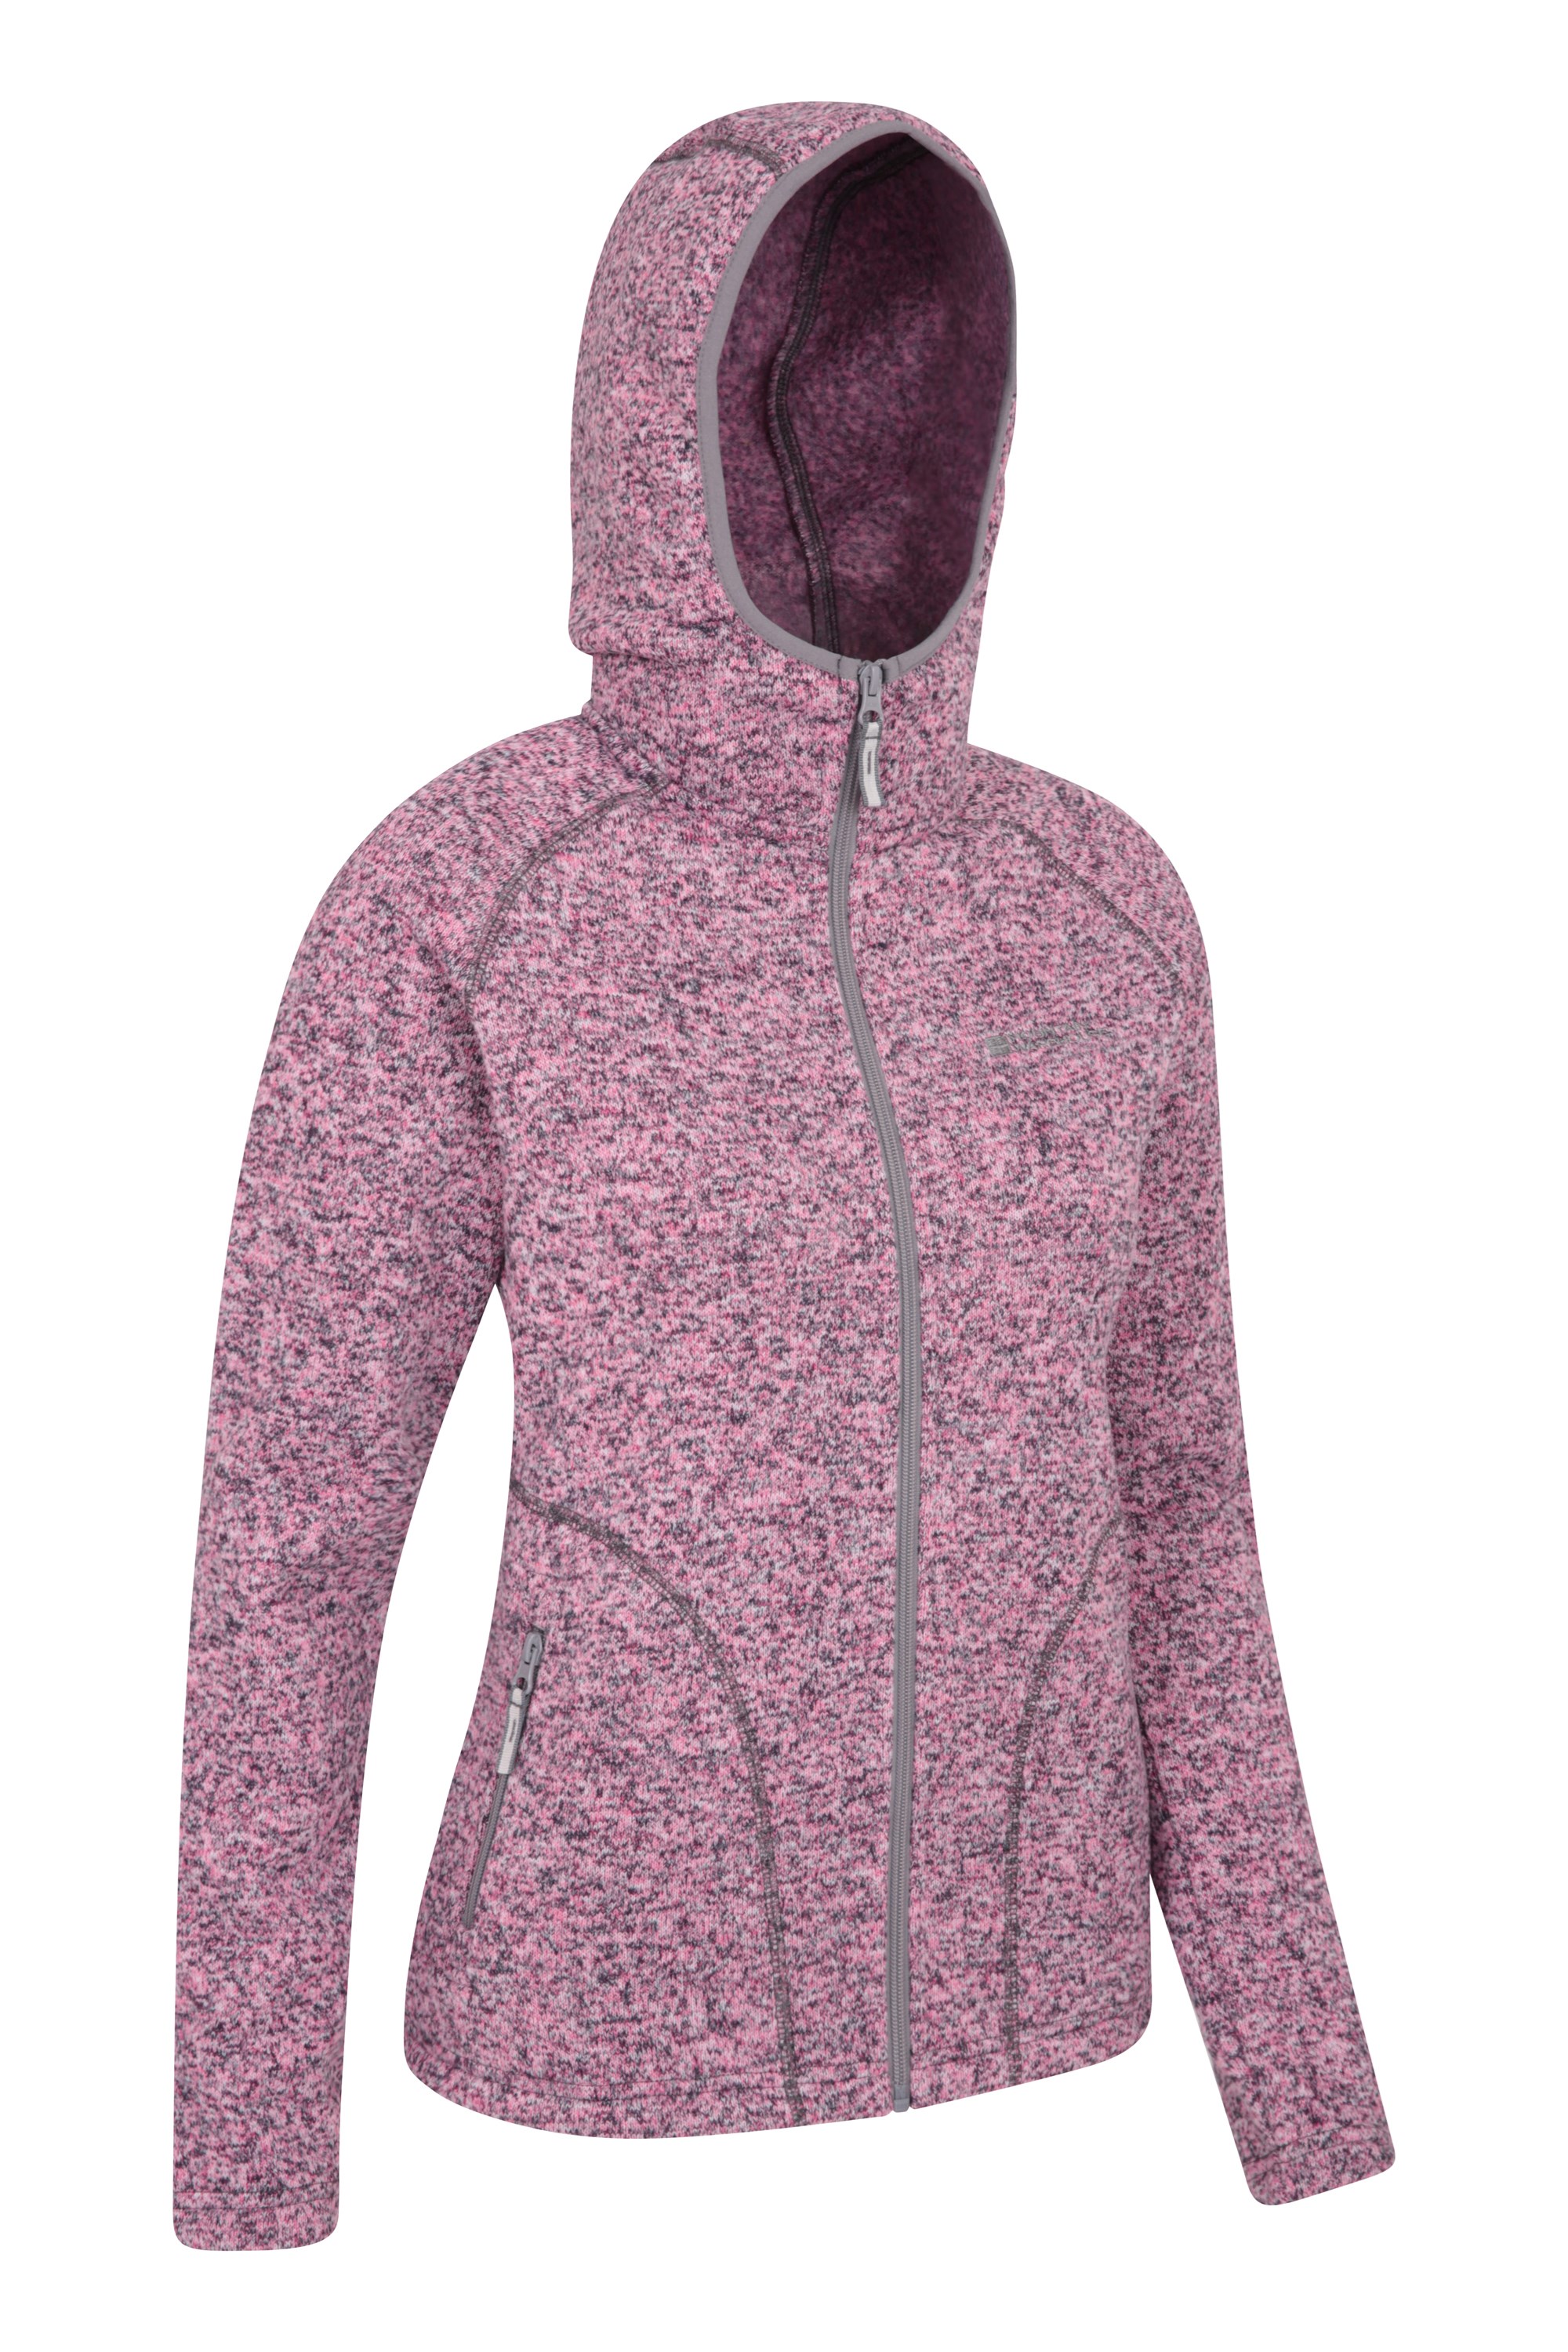 Mountain Warehouse Mountain Warehouse Womens Pink   Pullover Sweatshirt Size 12 